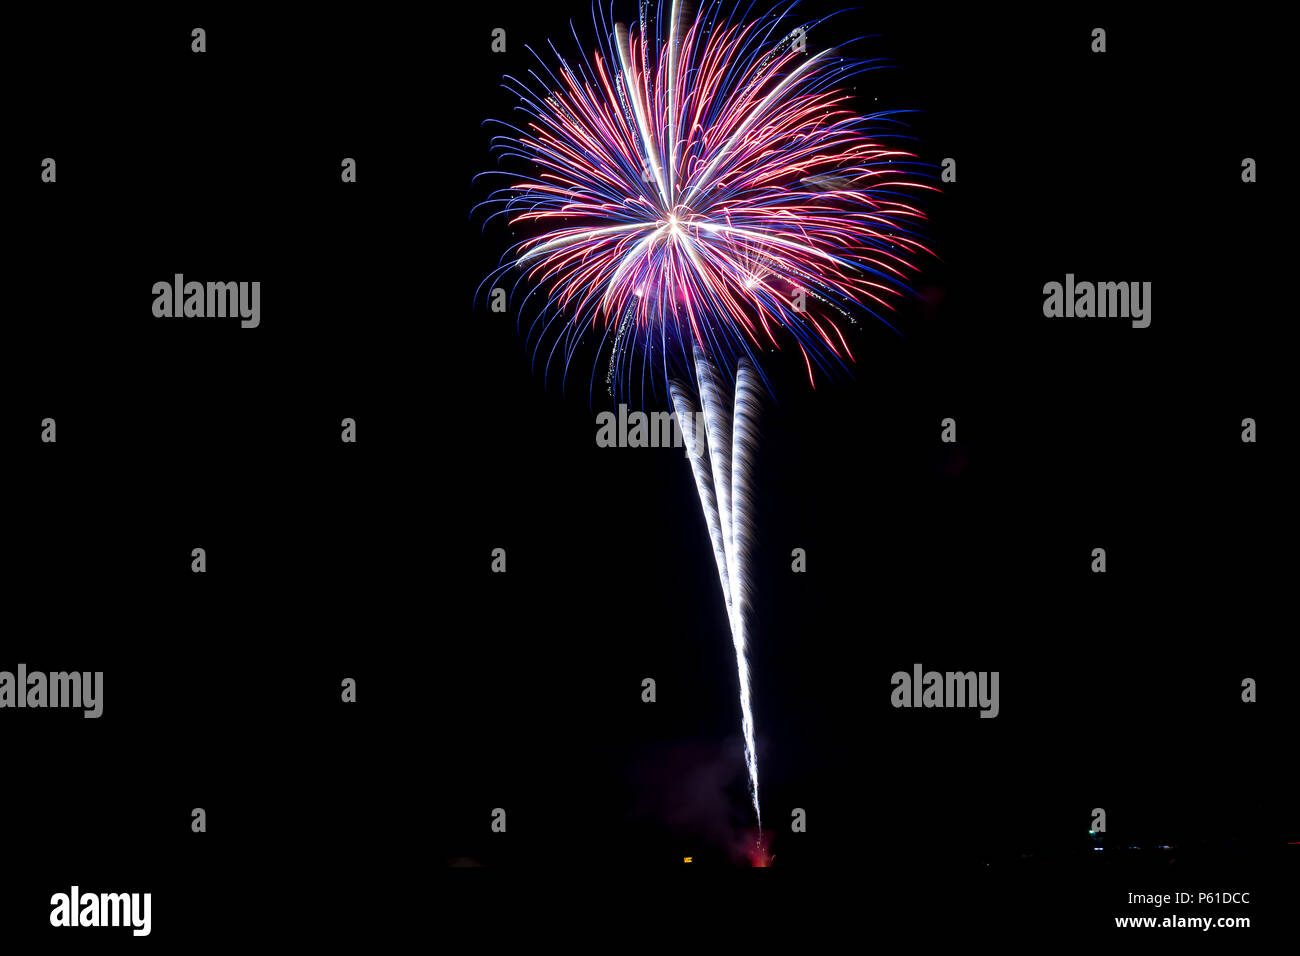 Fireworks Display at Night Stock Photo